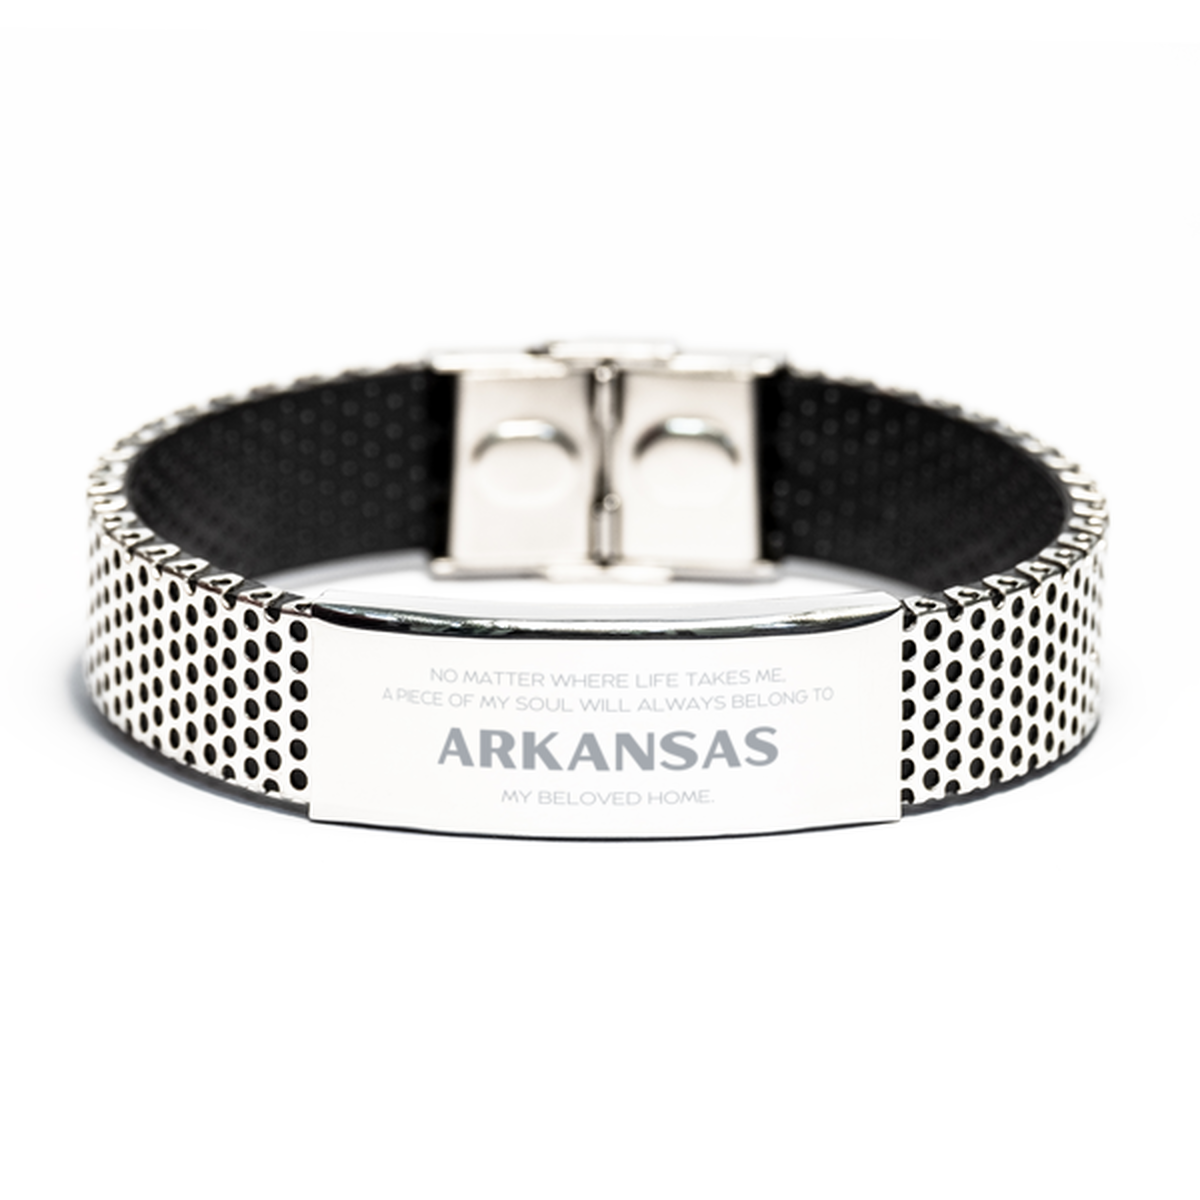 Love Arkansas State Gifts, My soul will always belong to Arkansas, Proud Stainless Steel Bracelet, Birthday Unique Gifts For Arkansas Men, Women, Friends